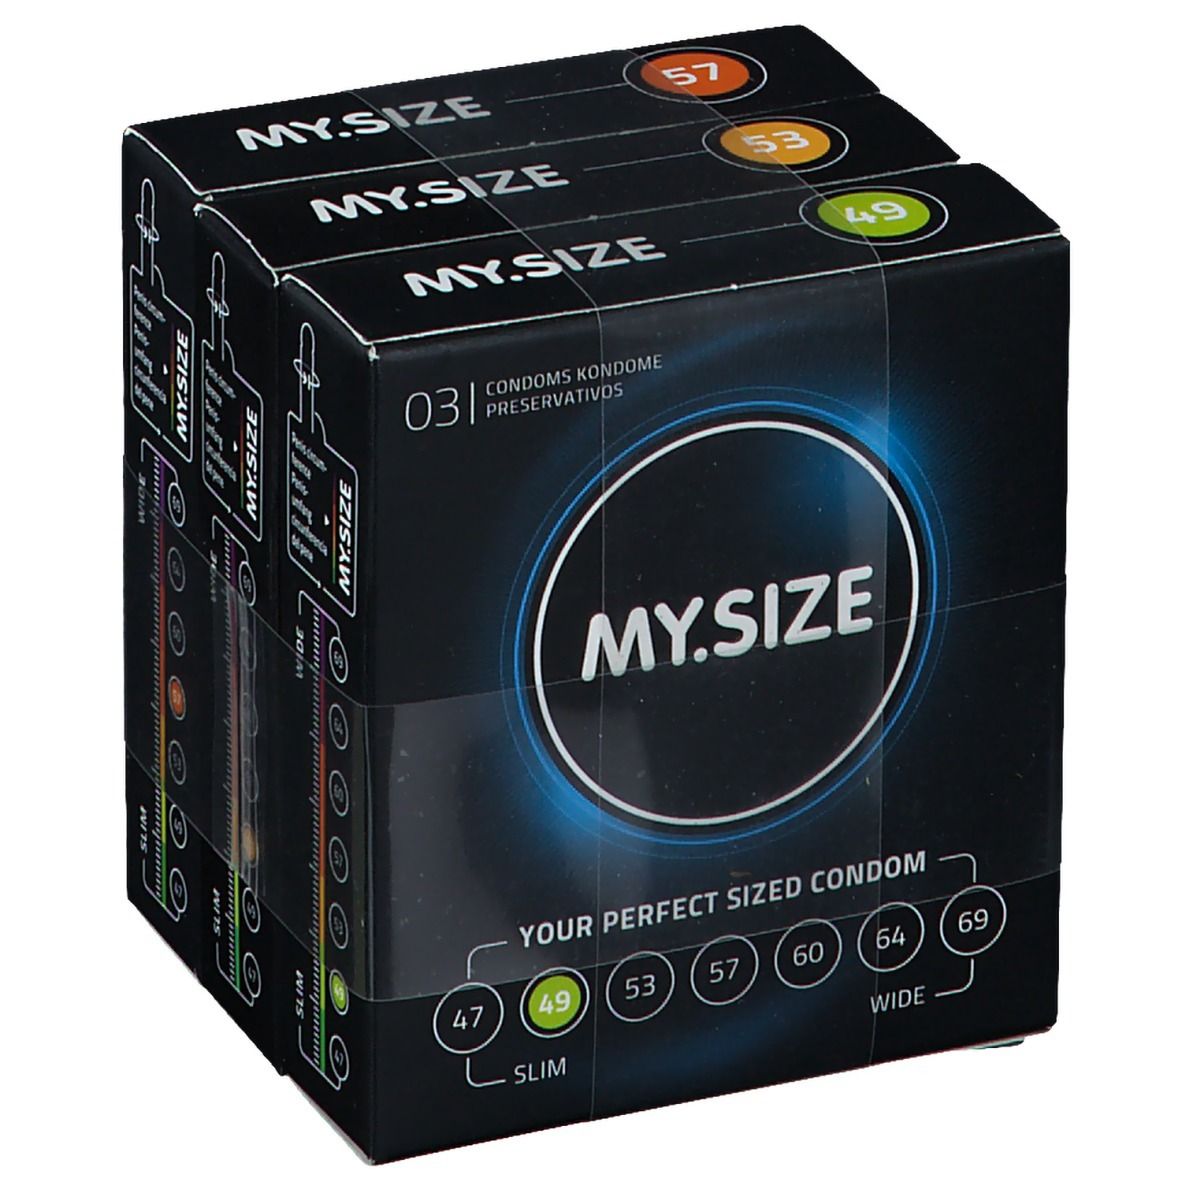 MY.SIZE 49 53 57 Kondome Testpack